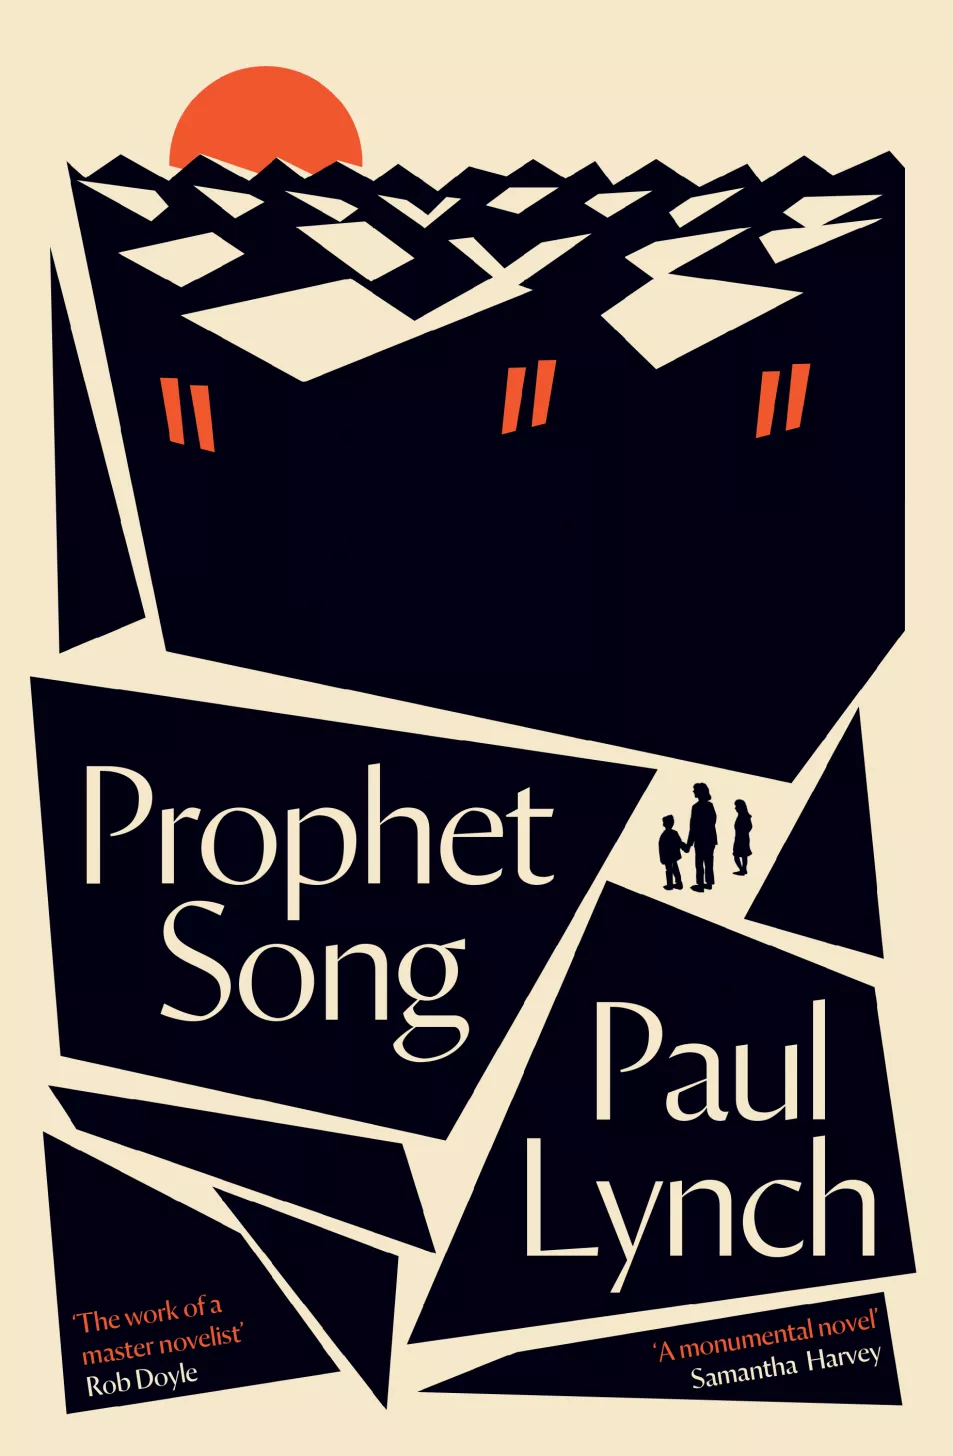 Prophet Song Paul Lynch